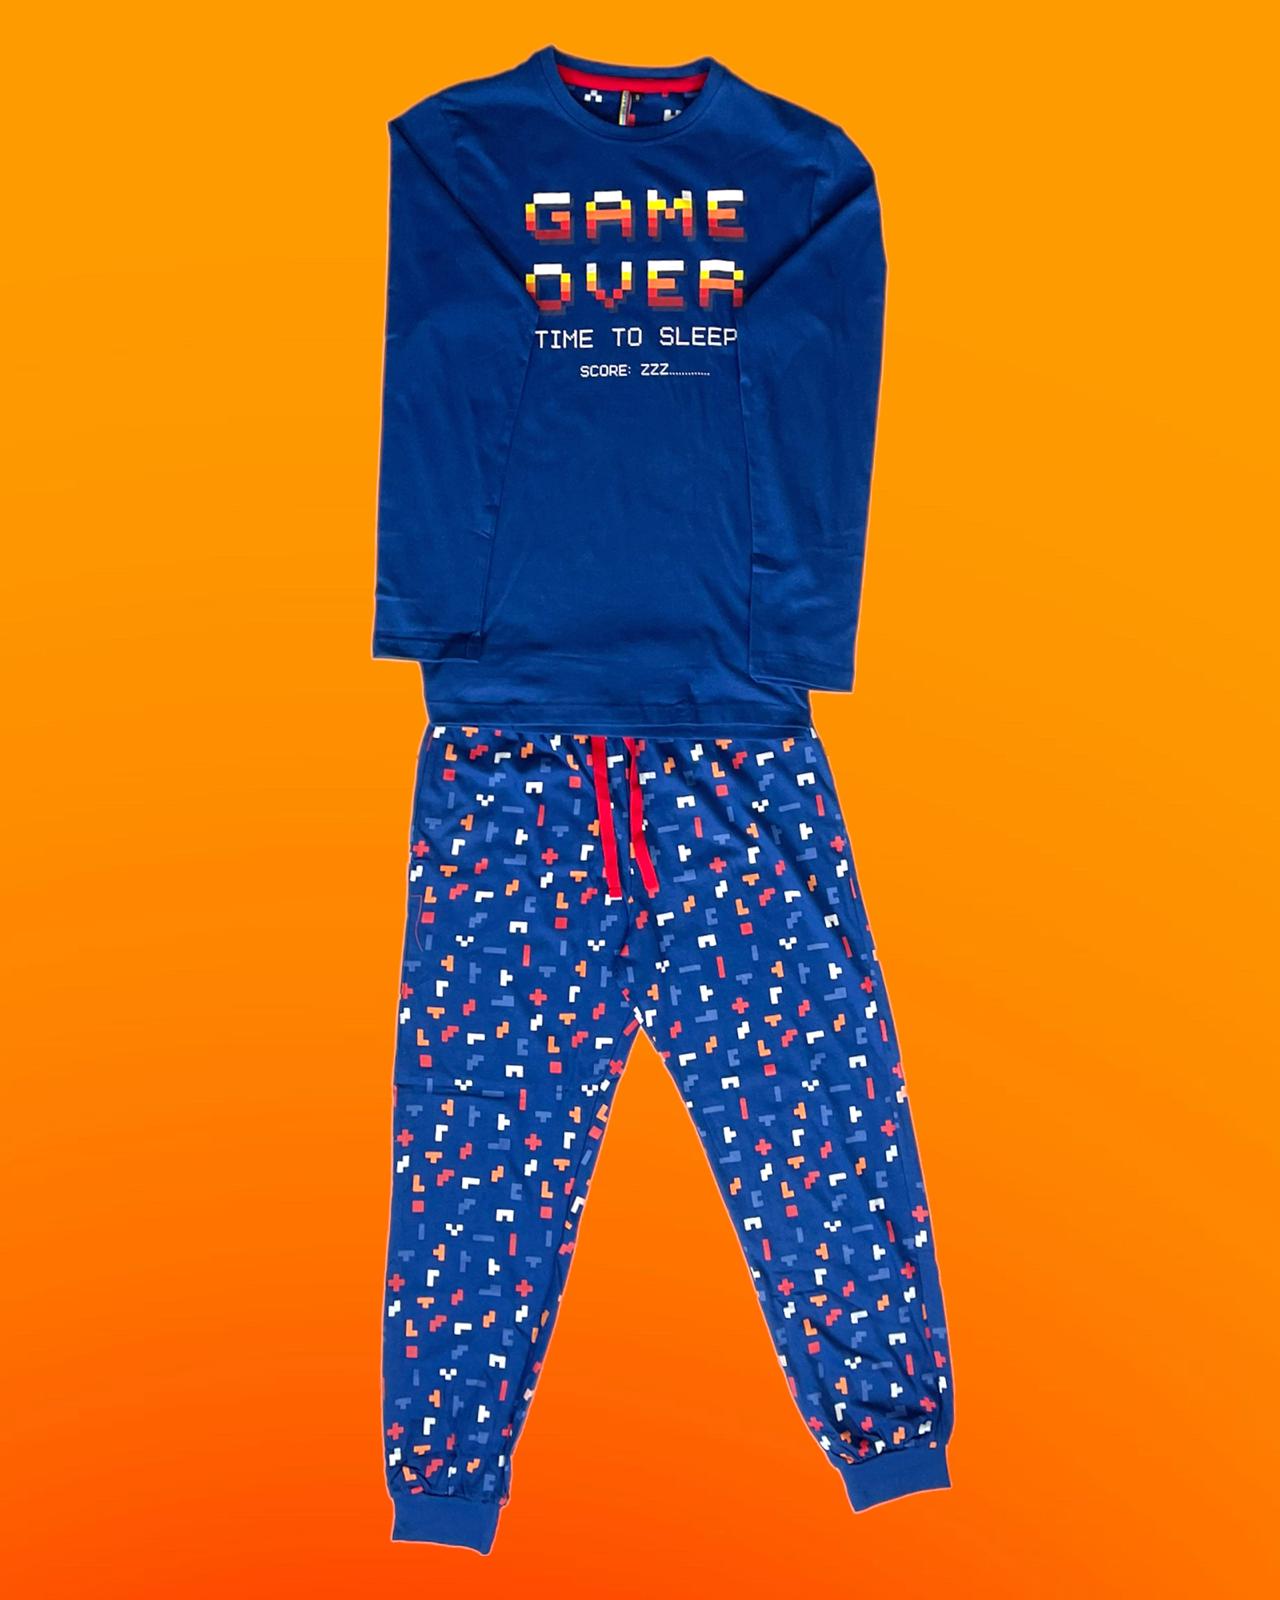 Diver x Admas | Blue gamer pajamas for men Game Over time to go to Sleep